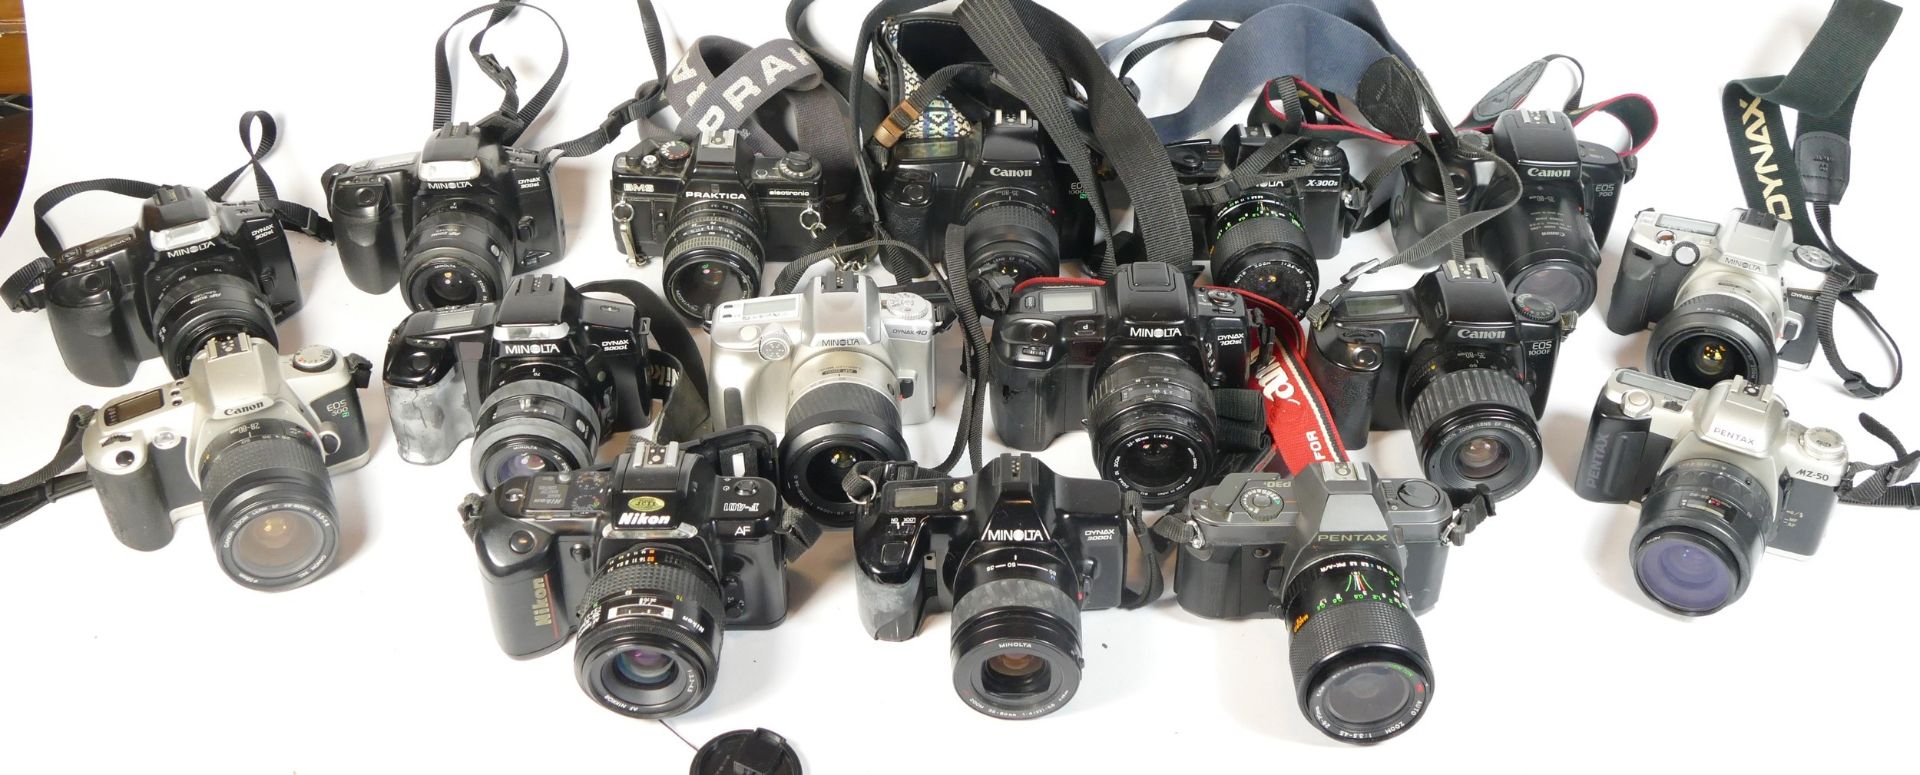 Twenty five SLR vintage film cameras to include a Minolta Maxxum 3000i, a Pentax MZ-50, a Canon